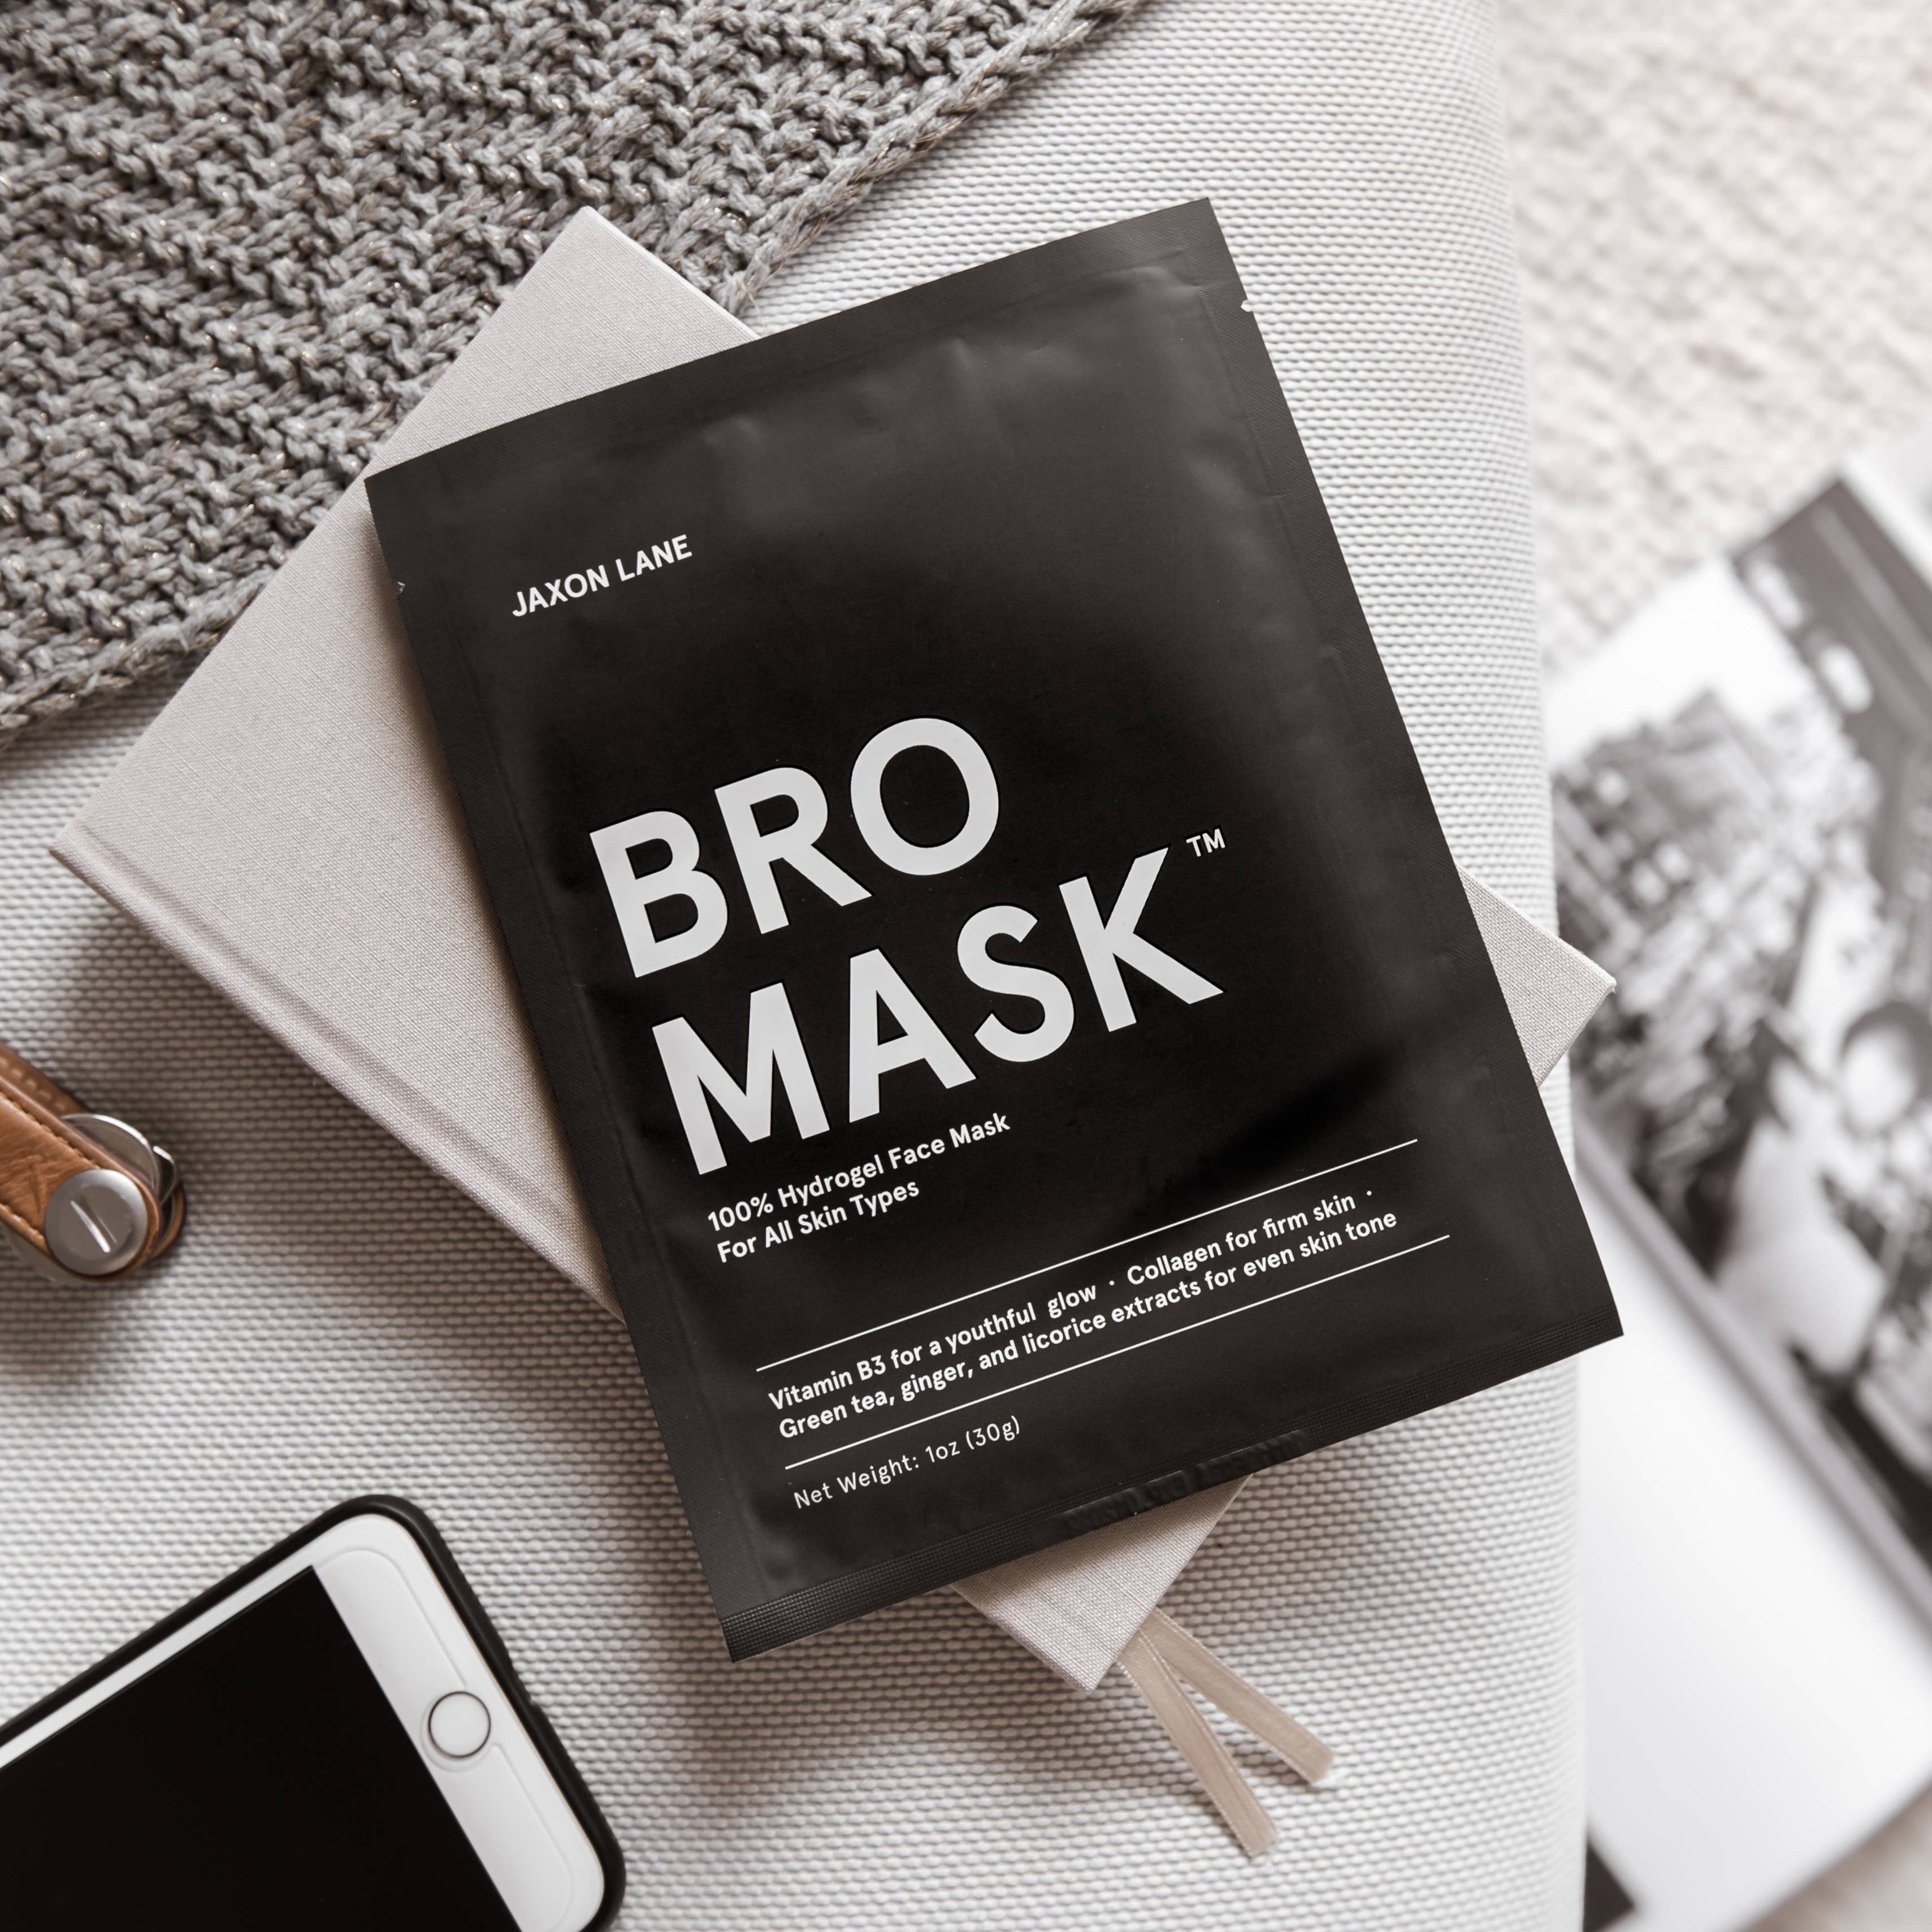 BRO MASK Hydrogel Face Mask (Box of 4) by JAXON LANE